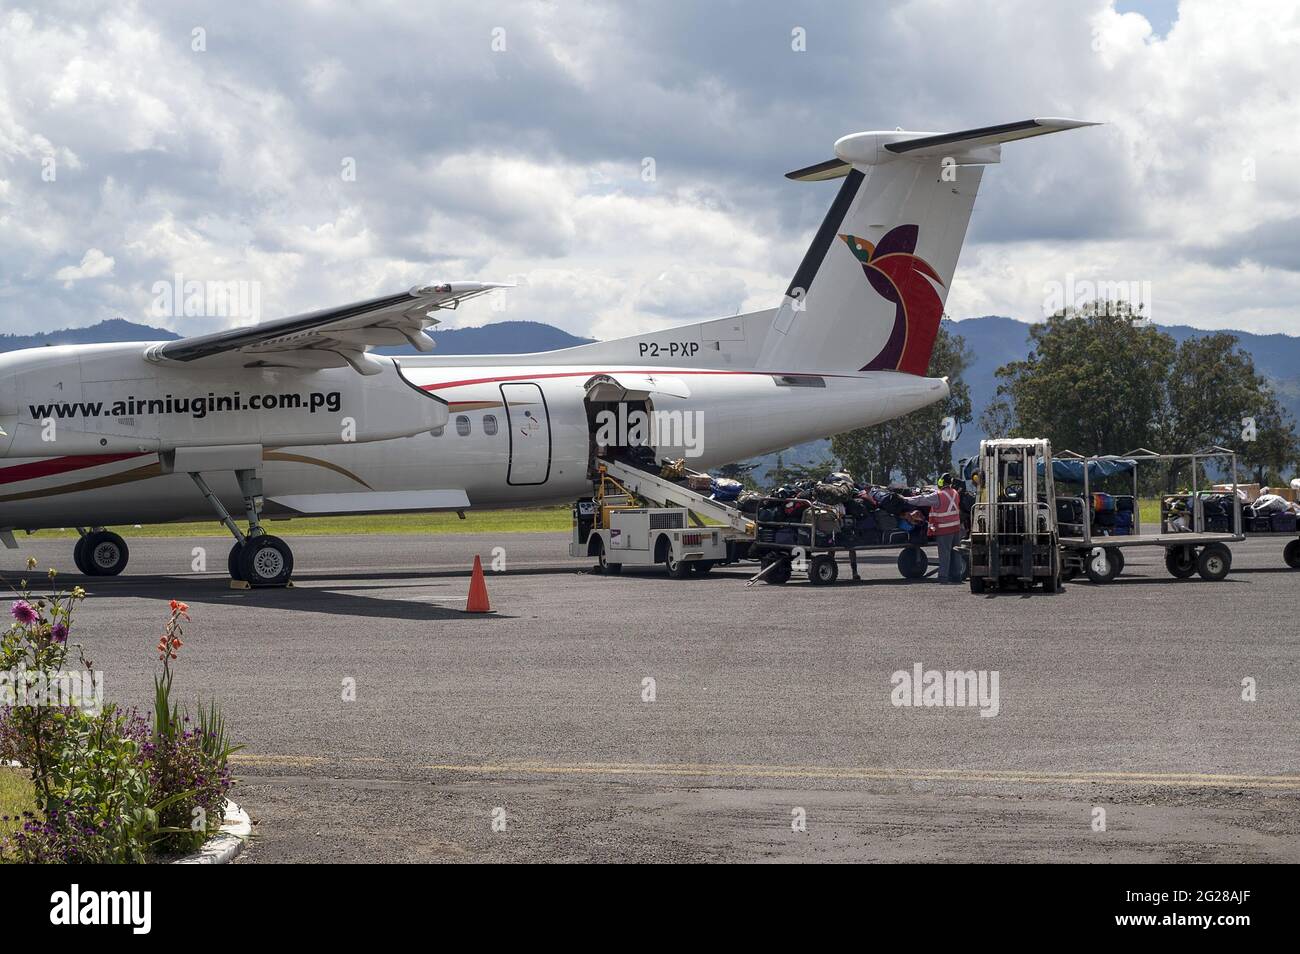 Papua New Guinea, Goroka - airport; The plane on the tarmac. Loading  luggage on the plane. Lotnisko, samolot, bagaż; Flughafen Stock Photo -  Alamy